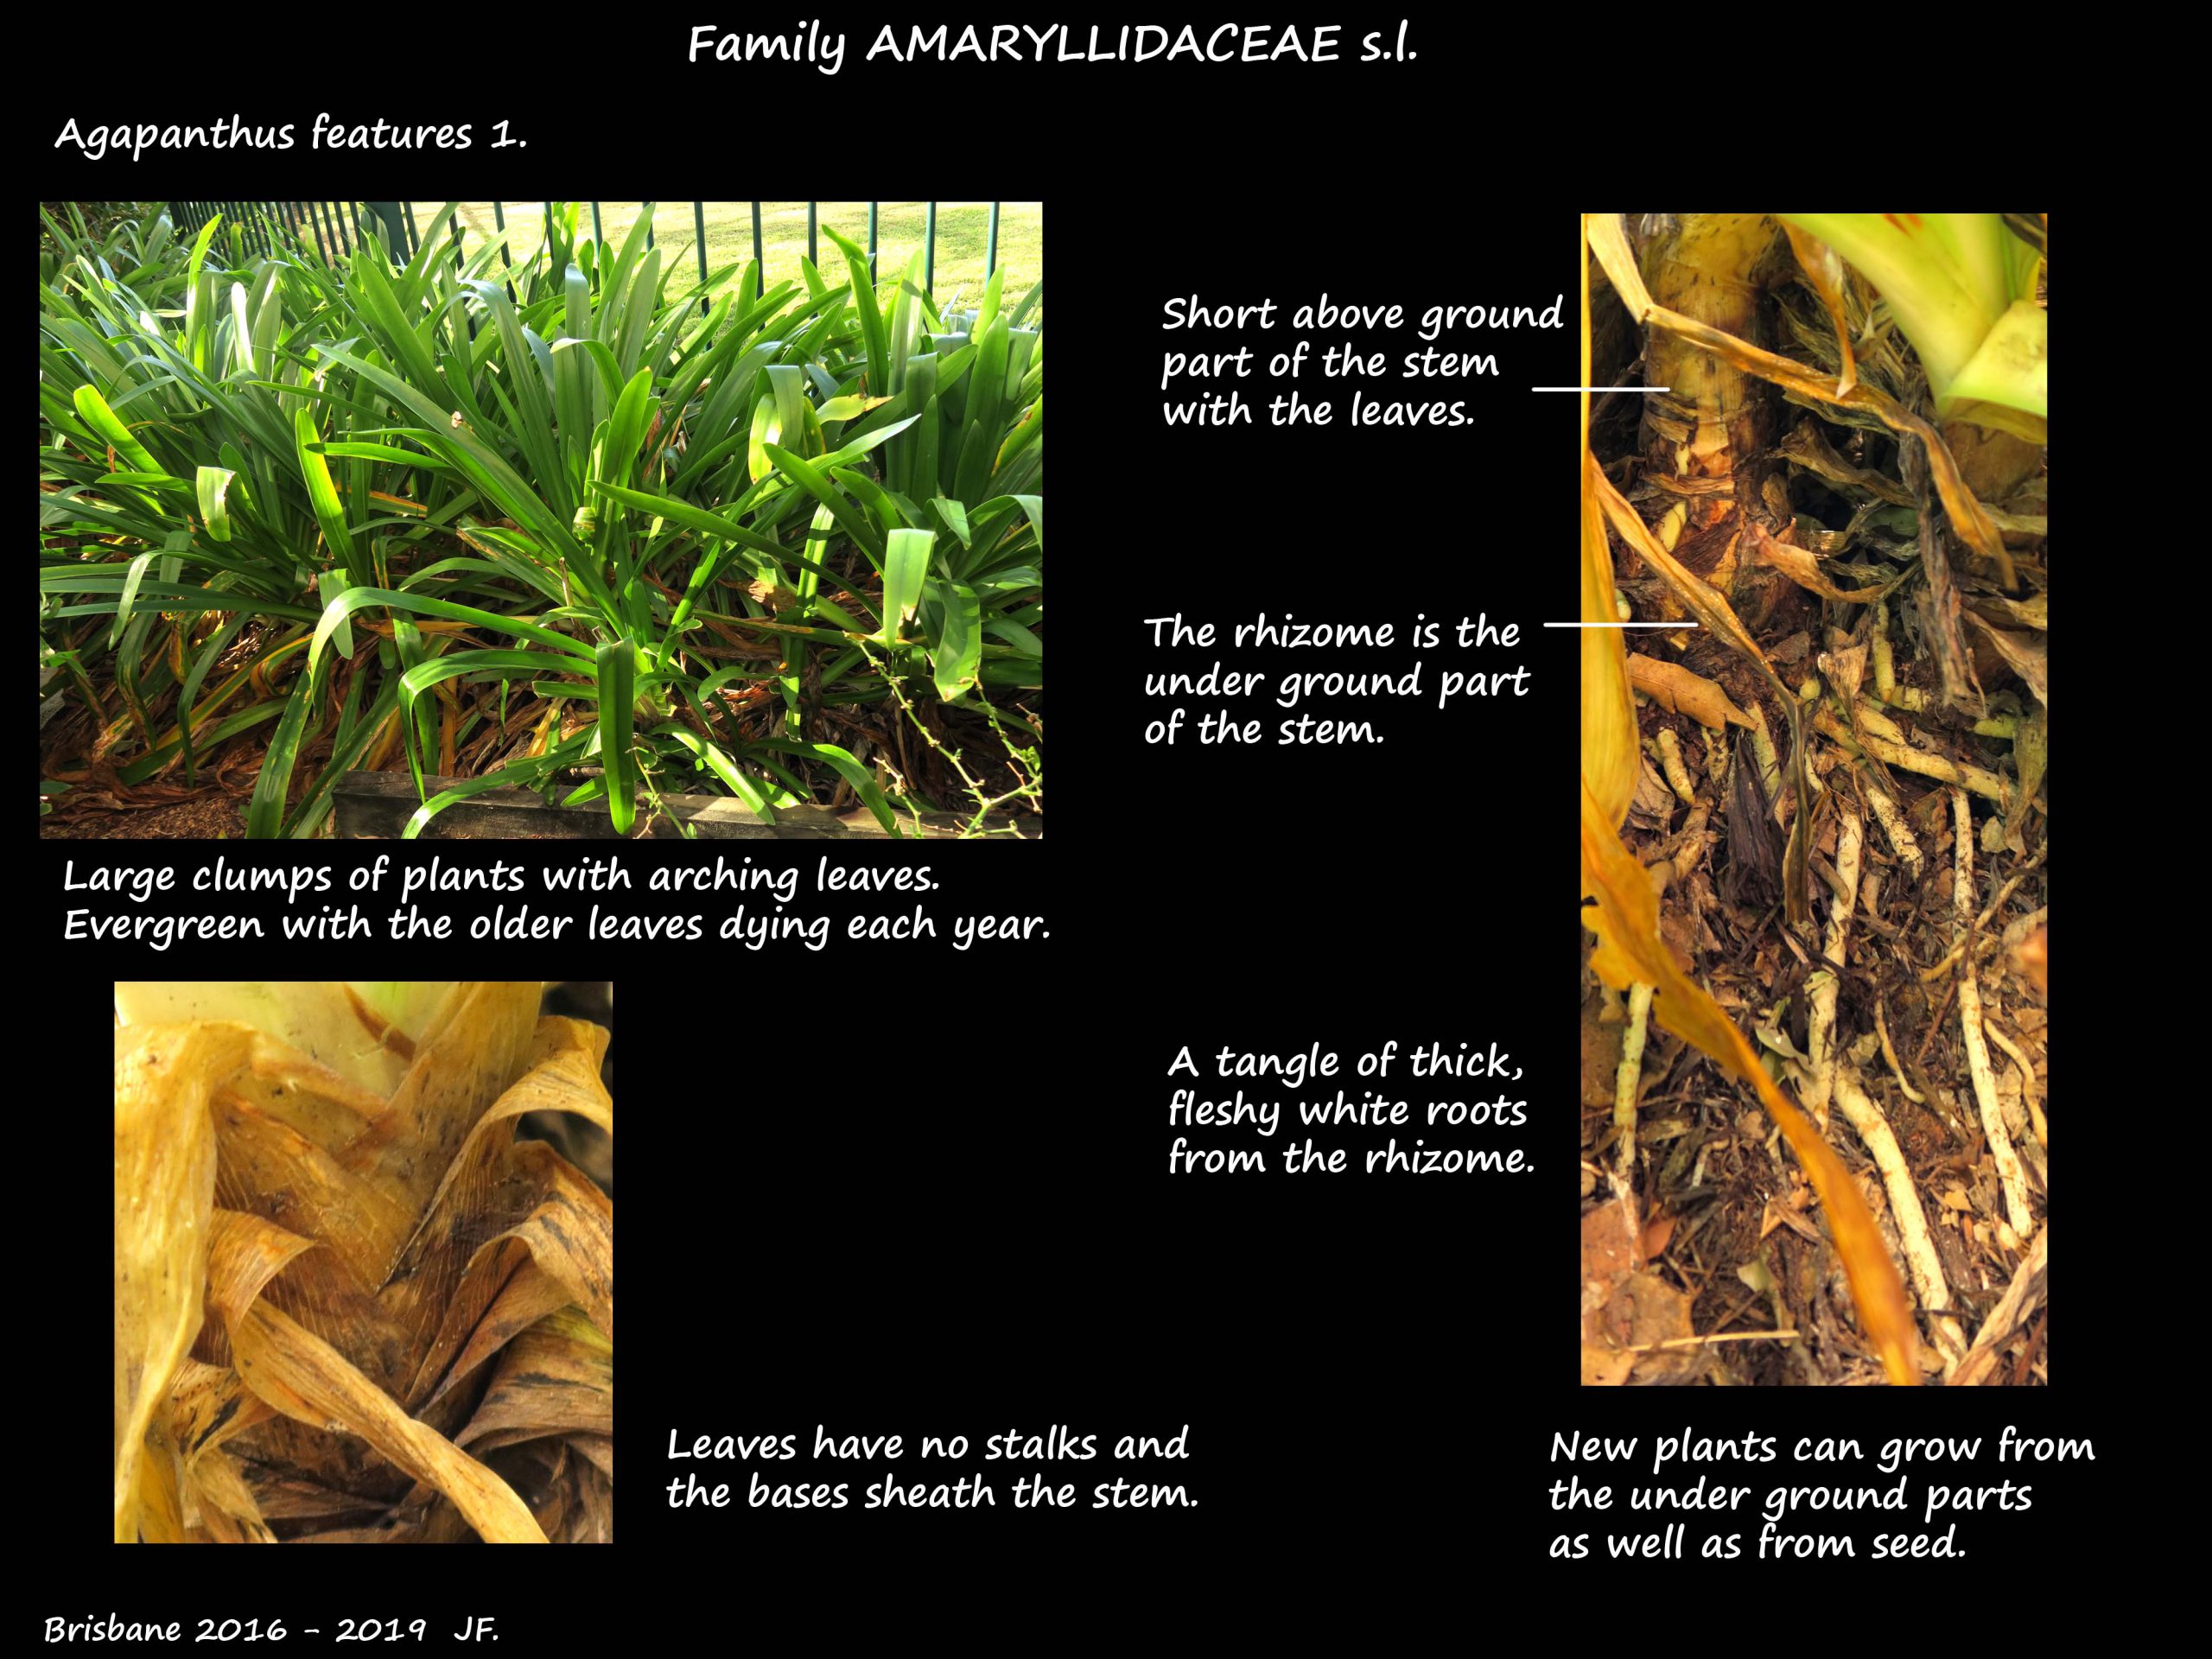 1 Agapanthus plant & roots